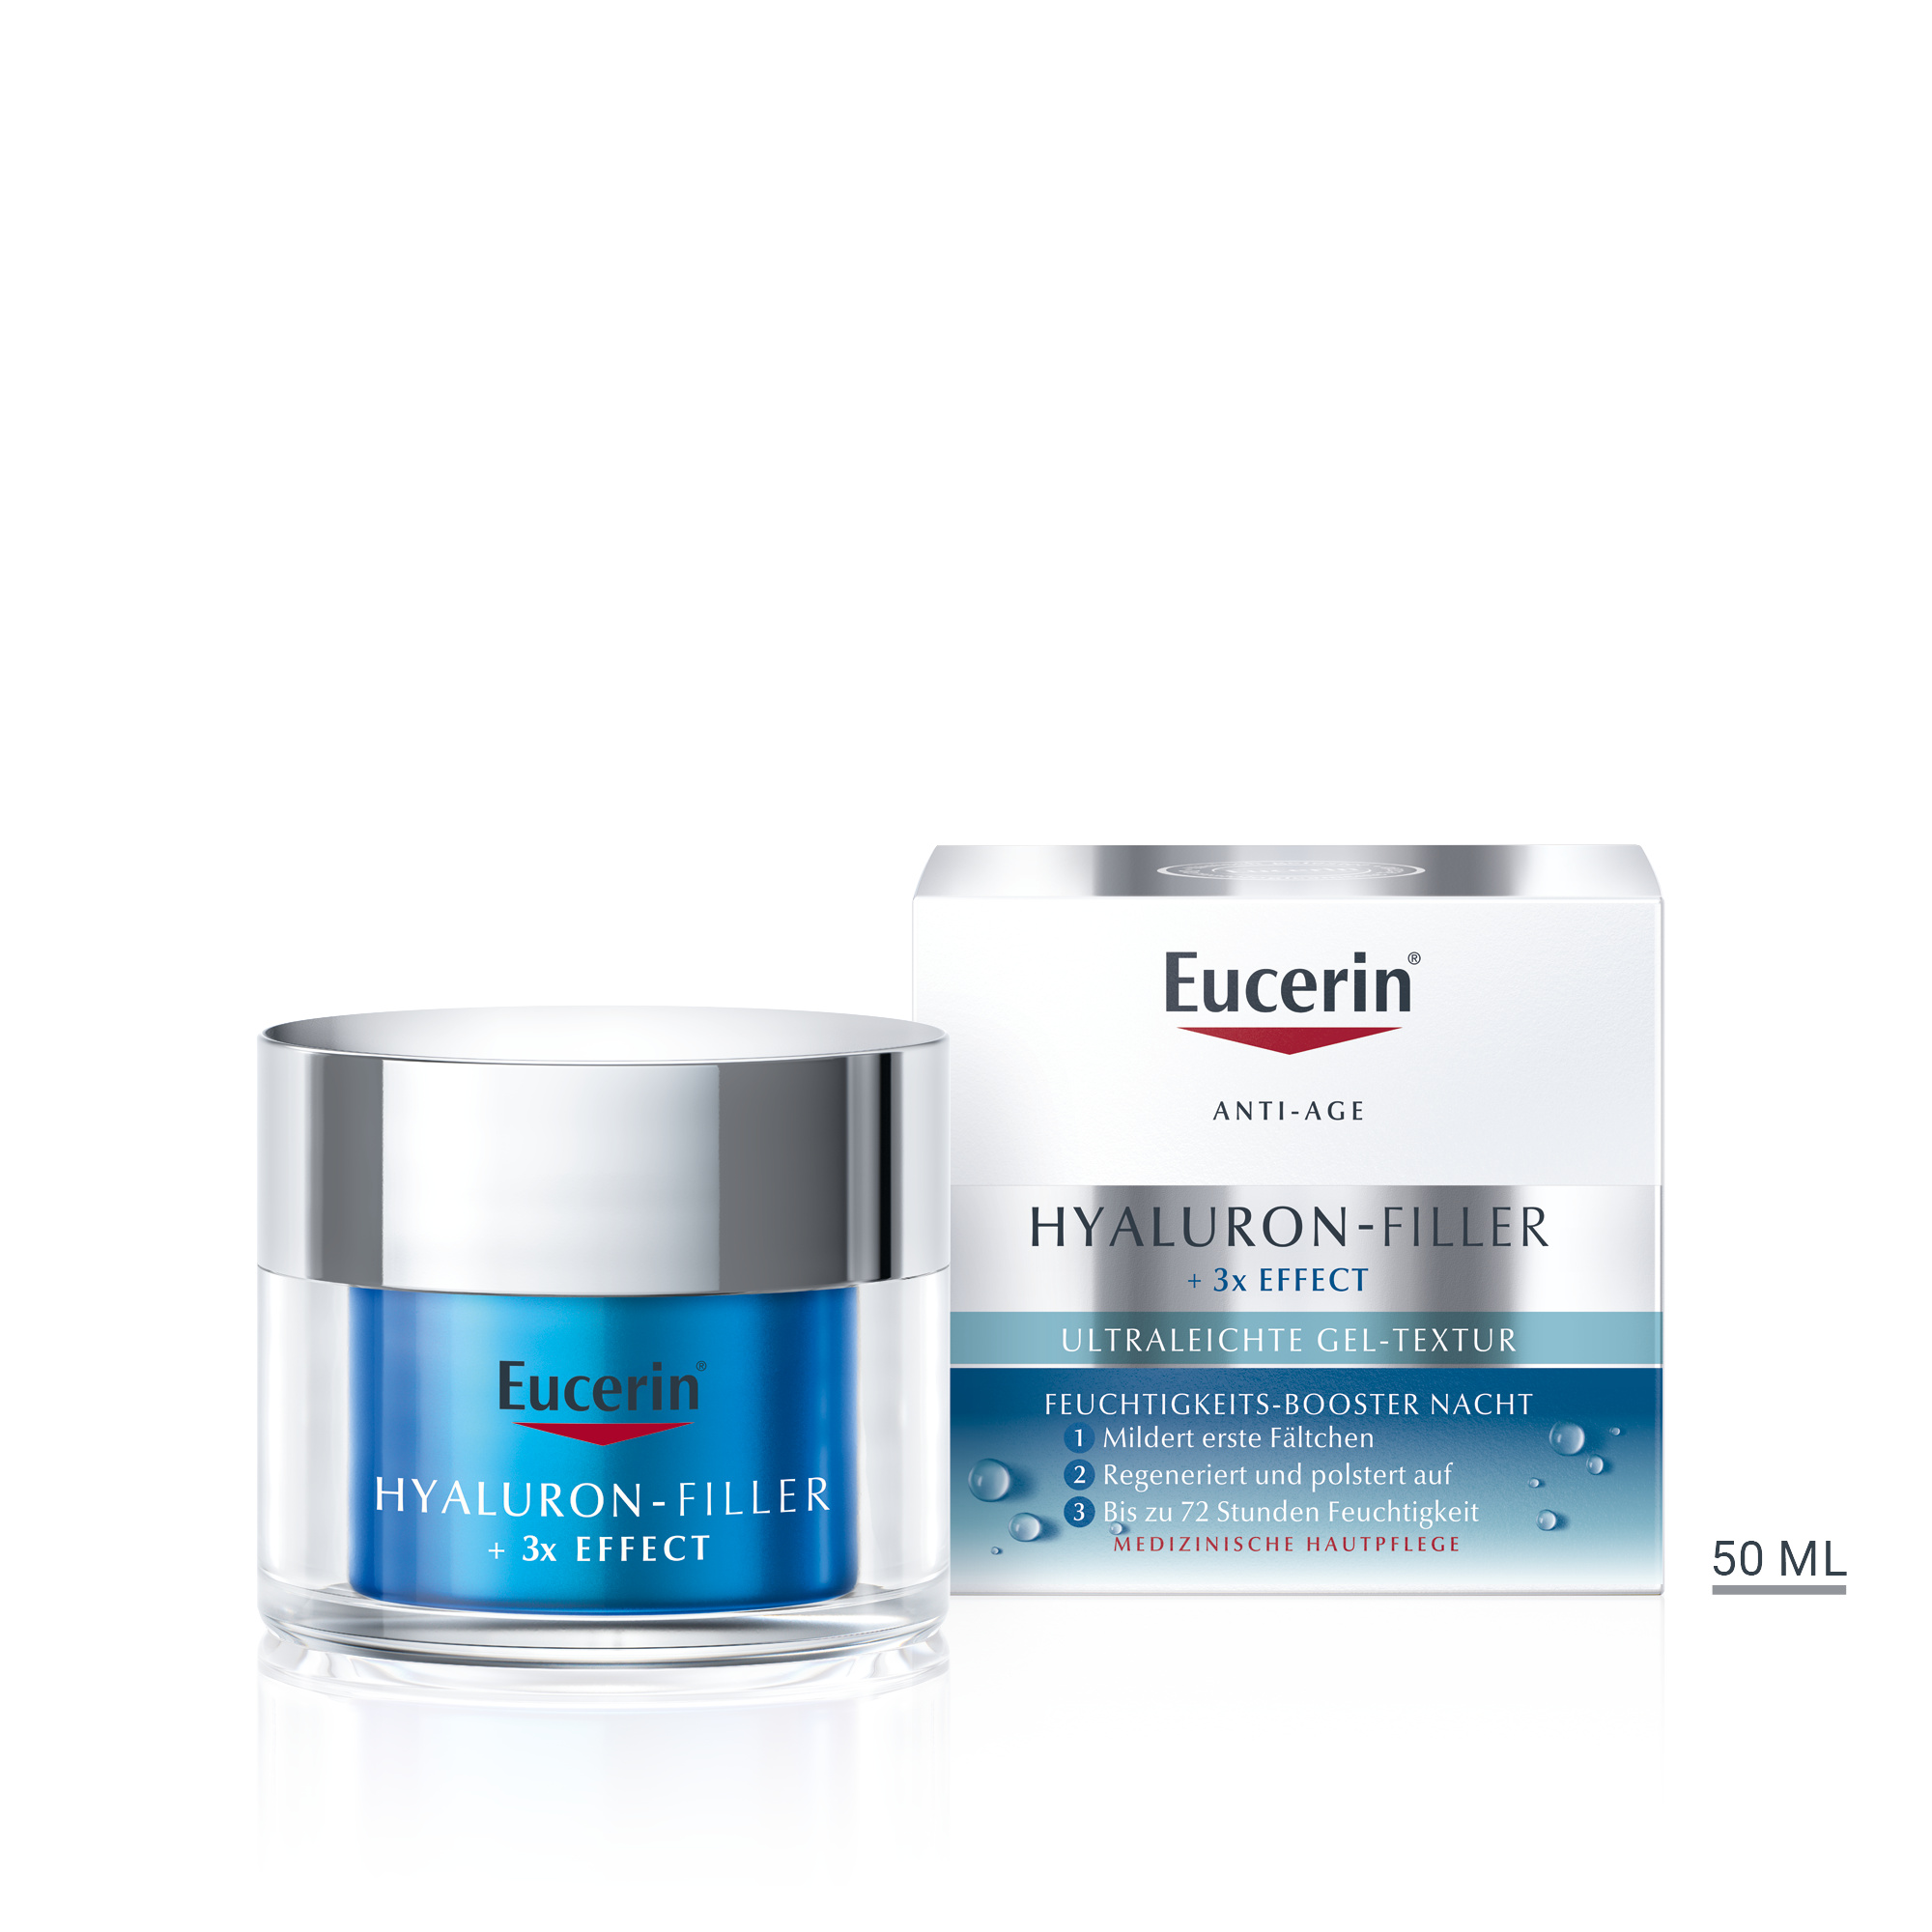 Eucerin Anti-Age Hyaluron-Filler Feuchtigkeits-Booster Nacht (50 ml)